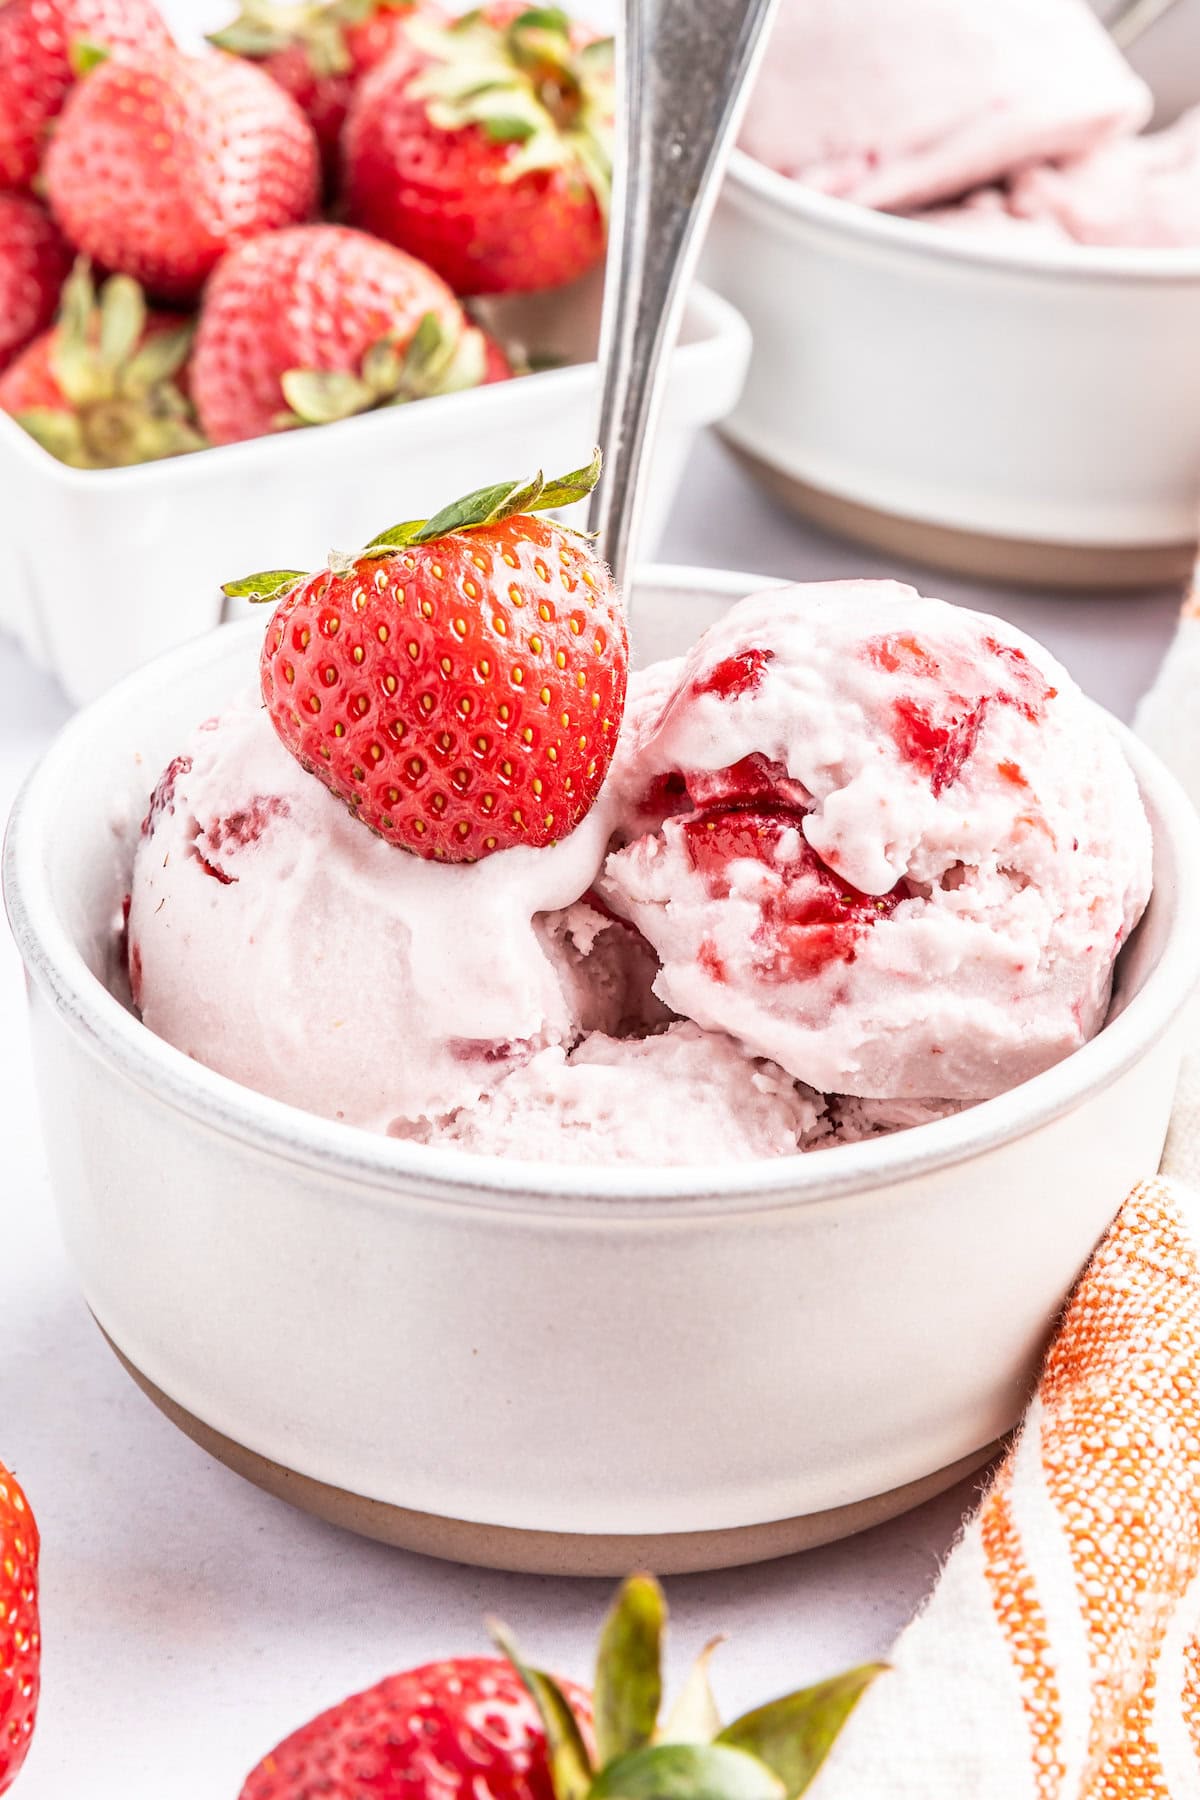 Best Vegan Strawberry Ice Cream